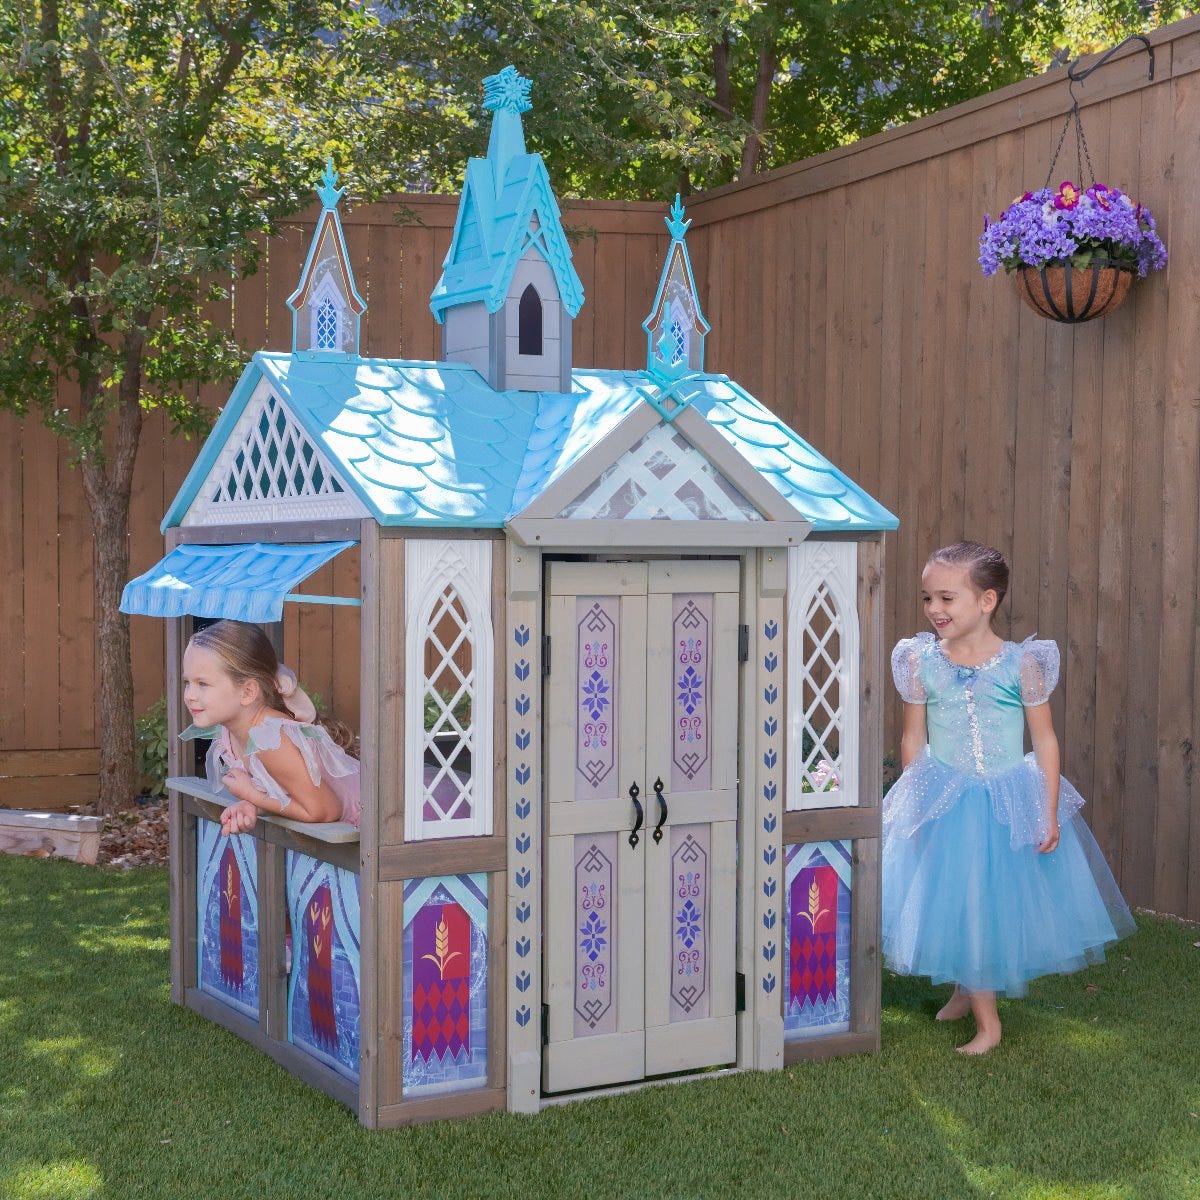 KidKraft Disney's Frozen Arendelle Kingdom Magical Castle